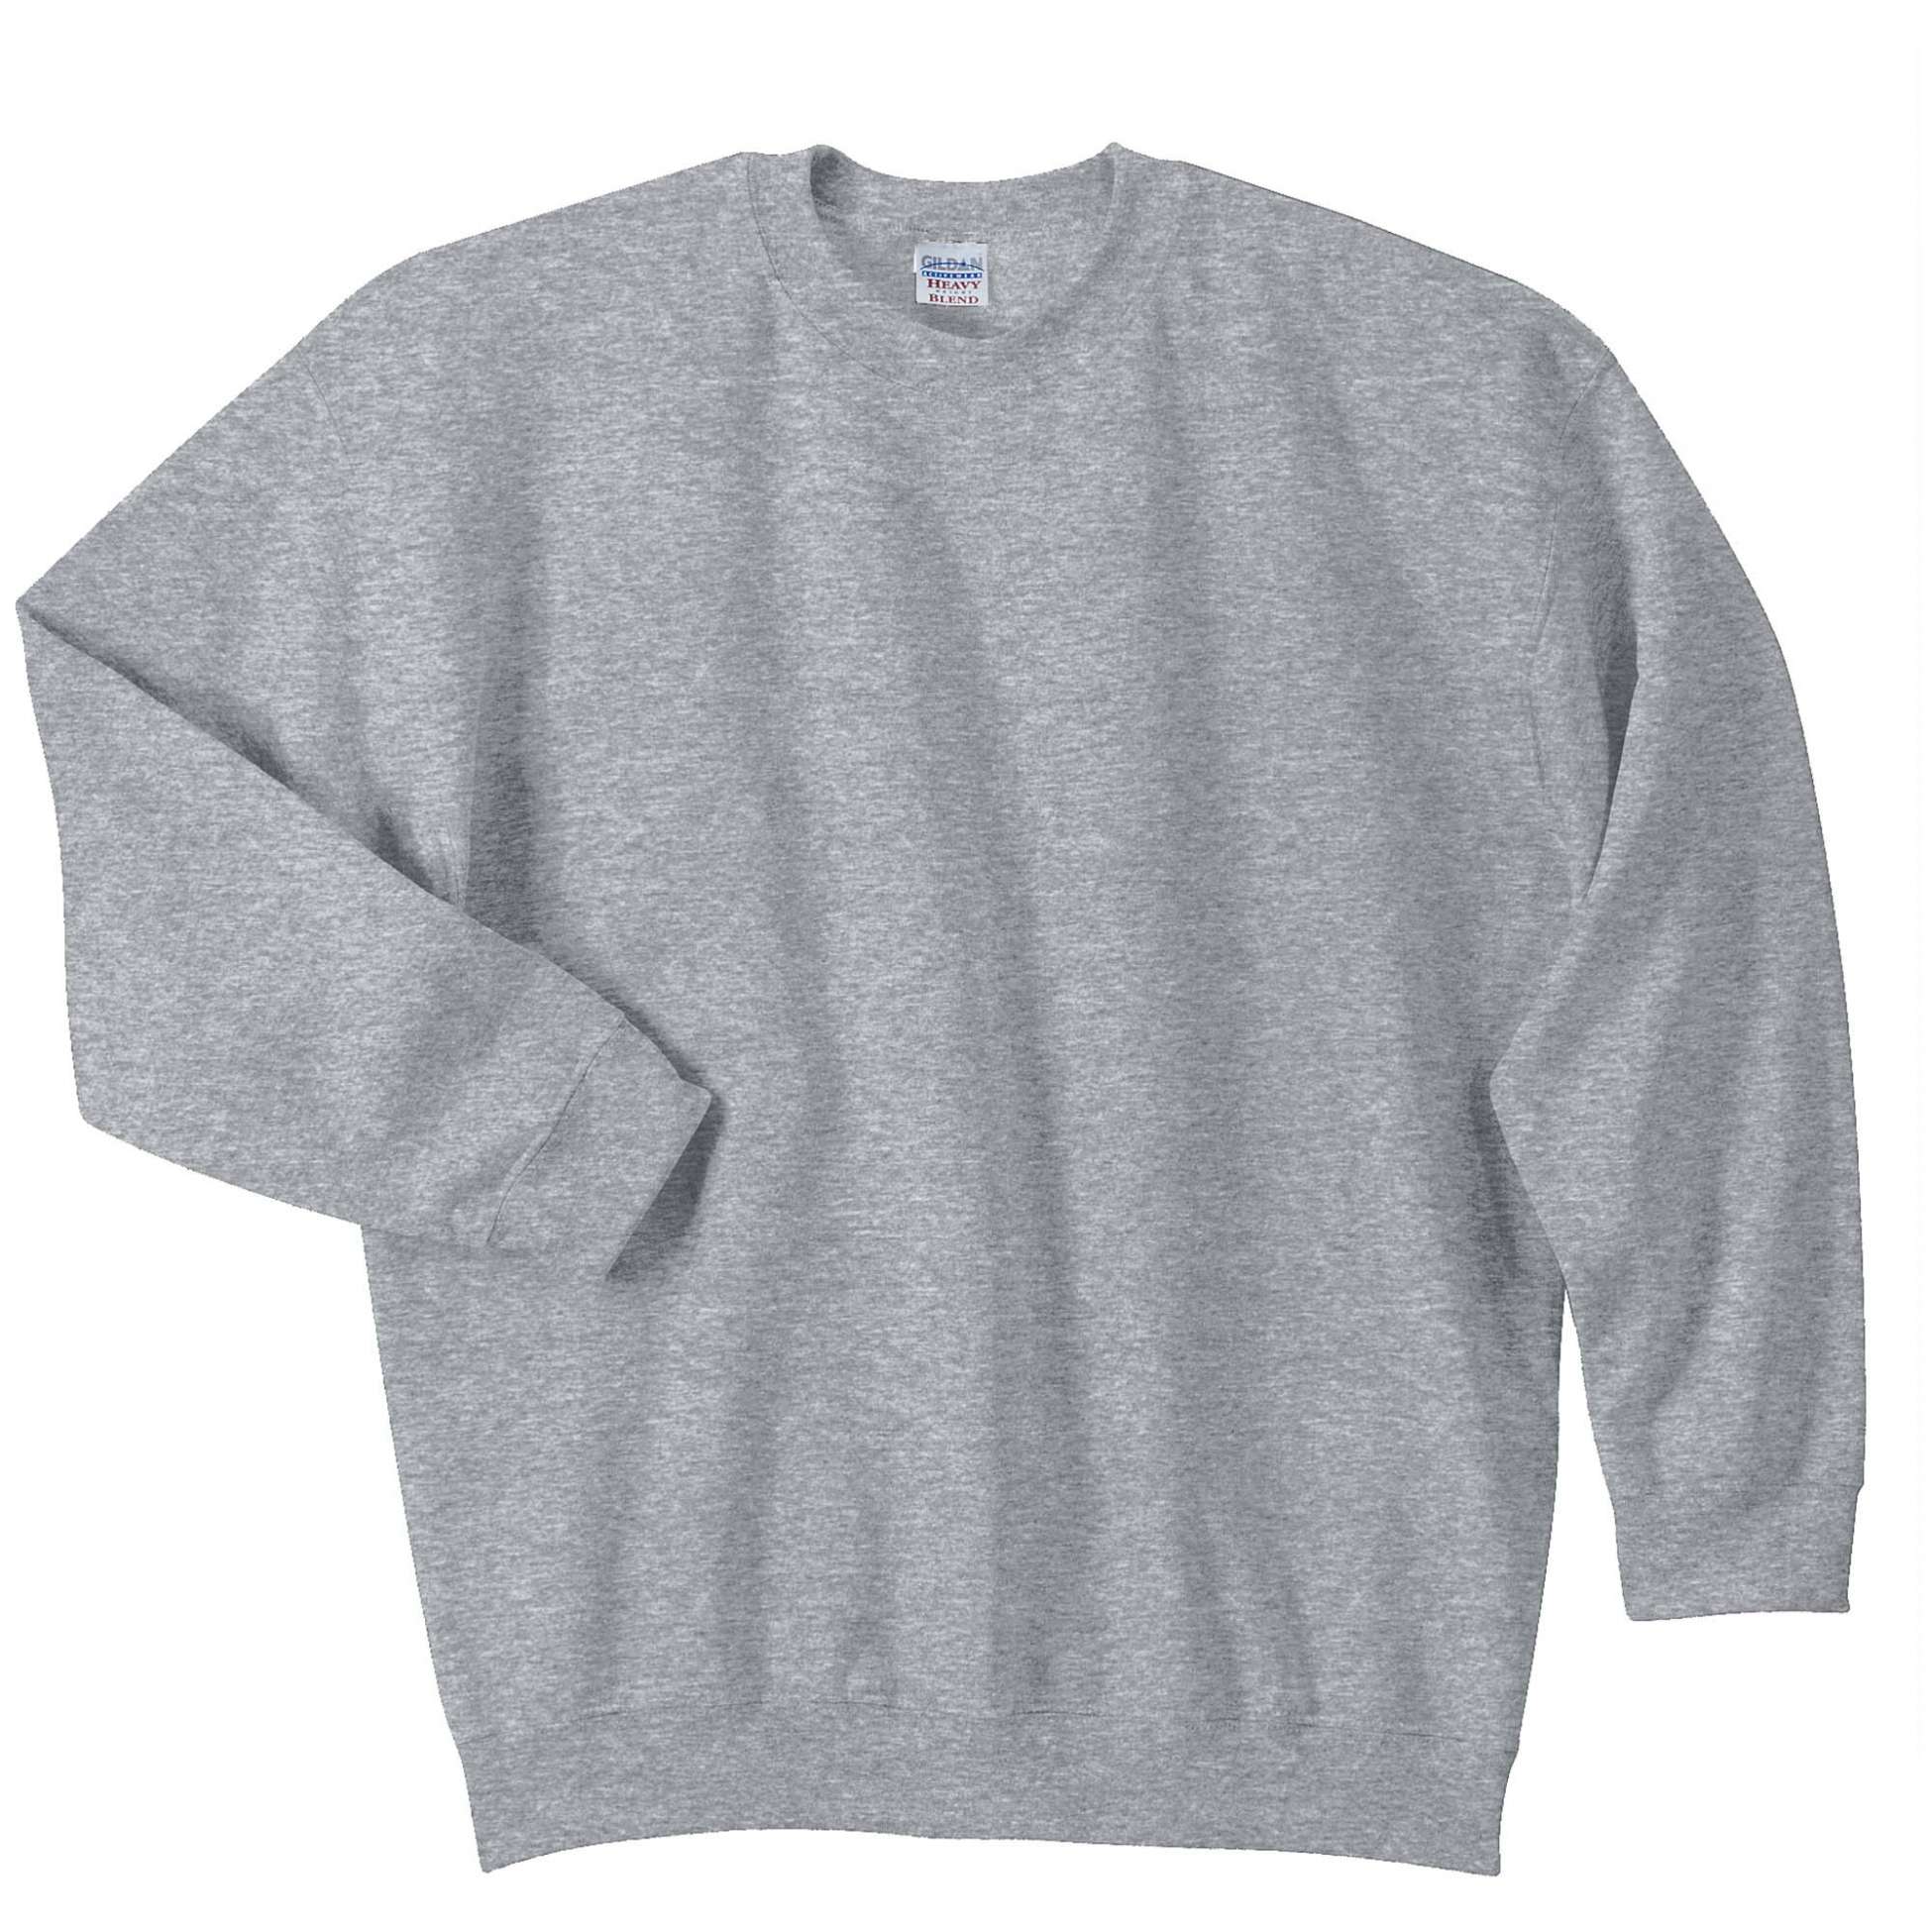 Gildan Women's Crewneck Sweatshirt, Sport Grey, Medium #sweatshirt